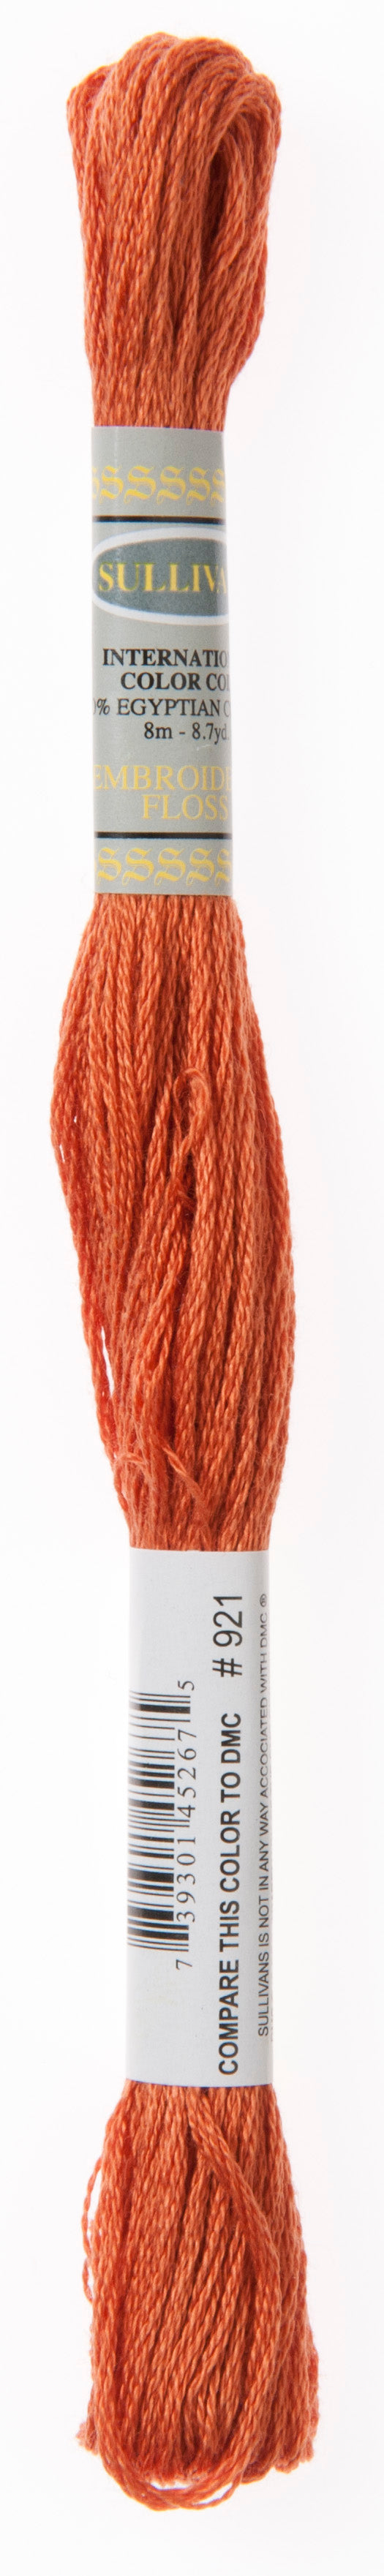 Sullivans Crochet Yarn 3ply, Harvest Gold- 50g Royal Rayon Yarn